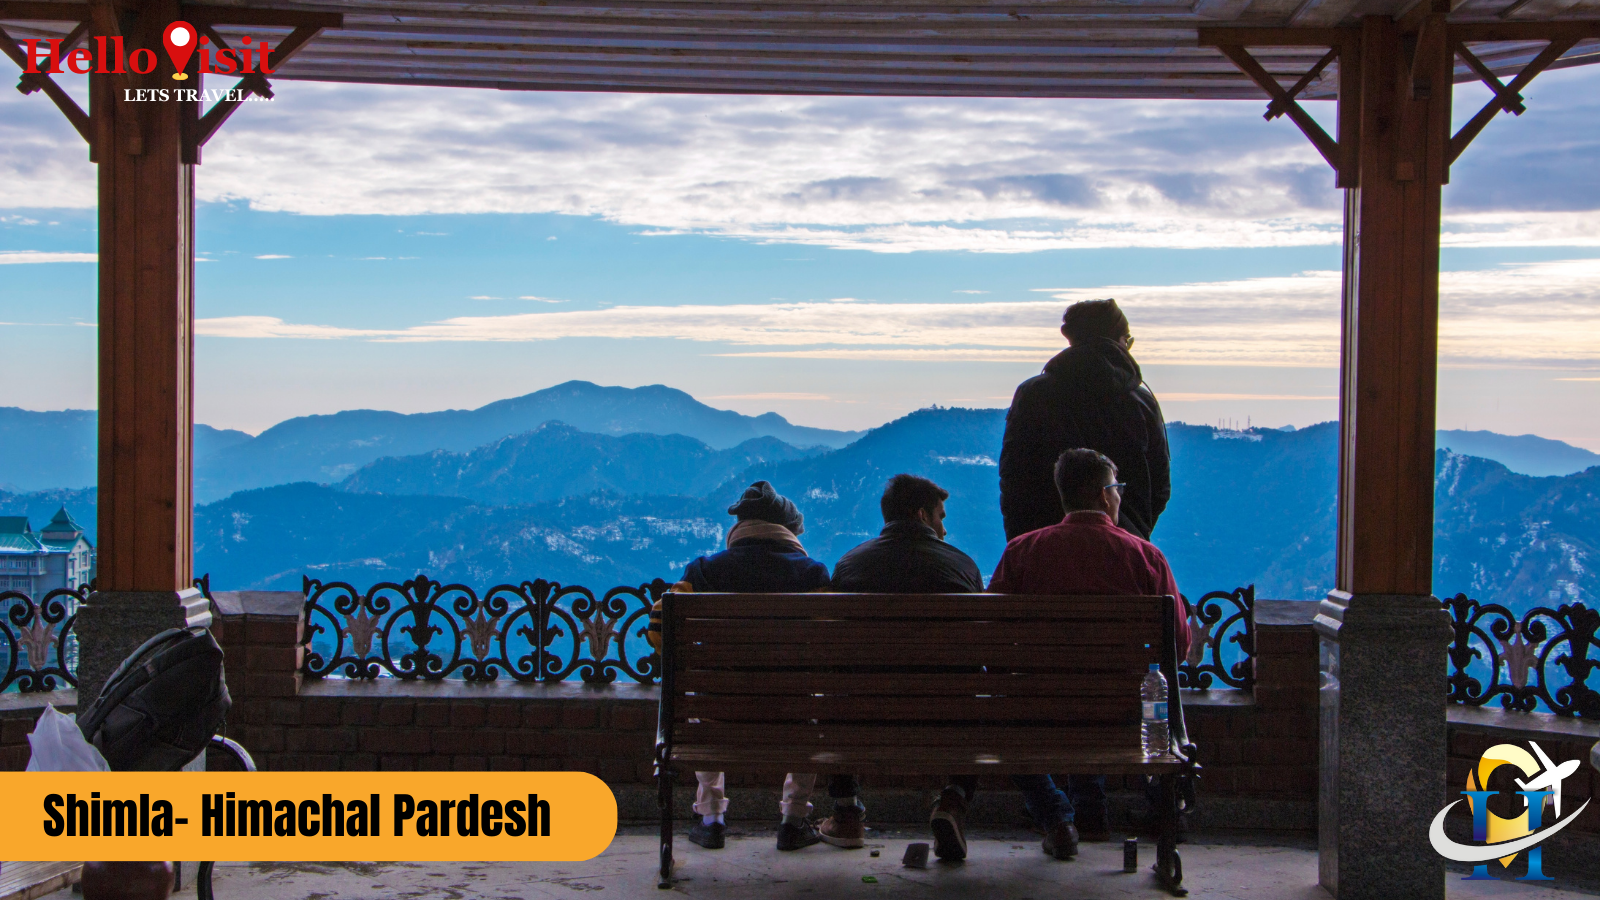  Shimla-Himachal Pardesh